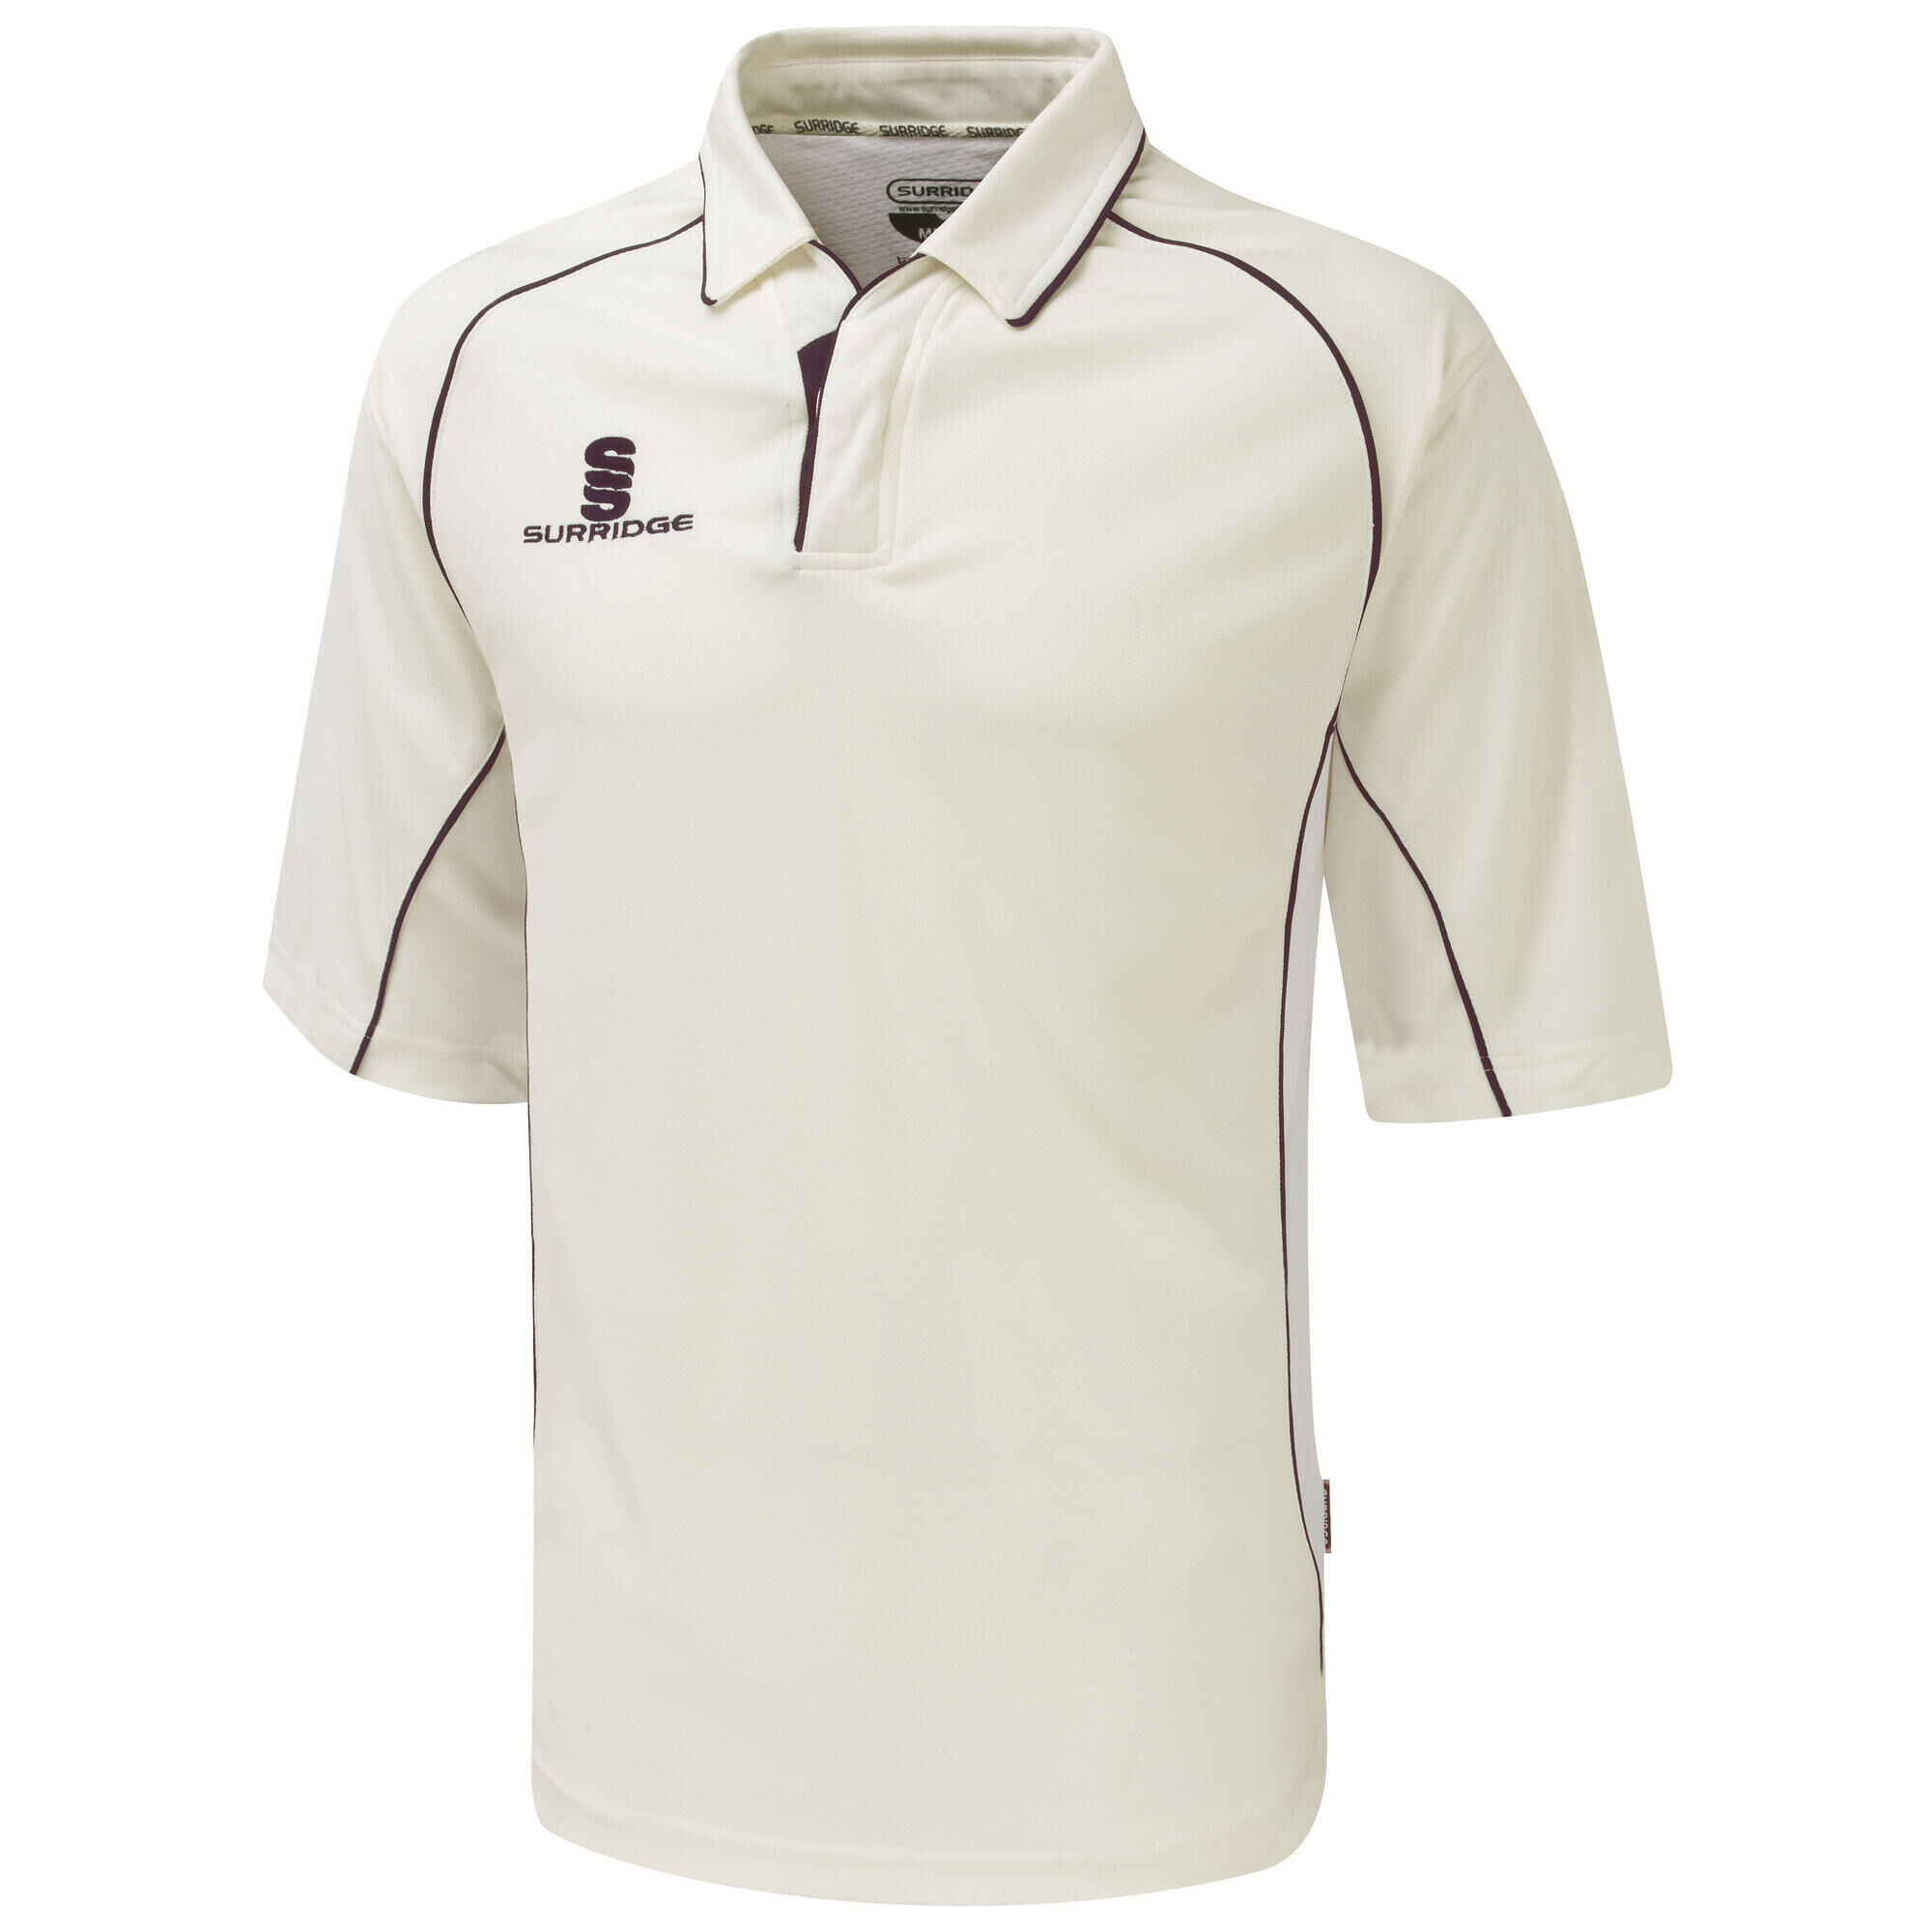 SURRIDGE Mens/Youth Premier Sports 3/4 Sleeve Polo Shirt (White/Maroon trim)